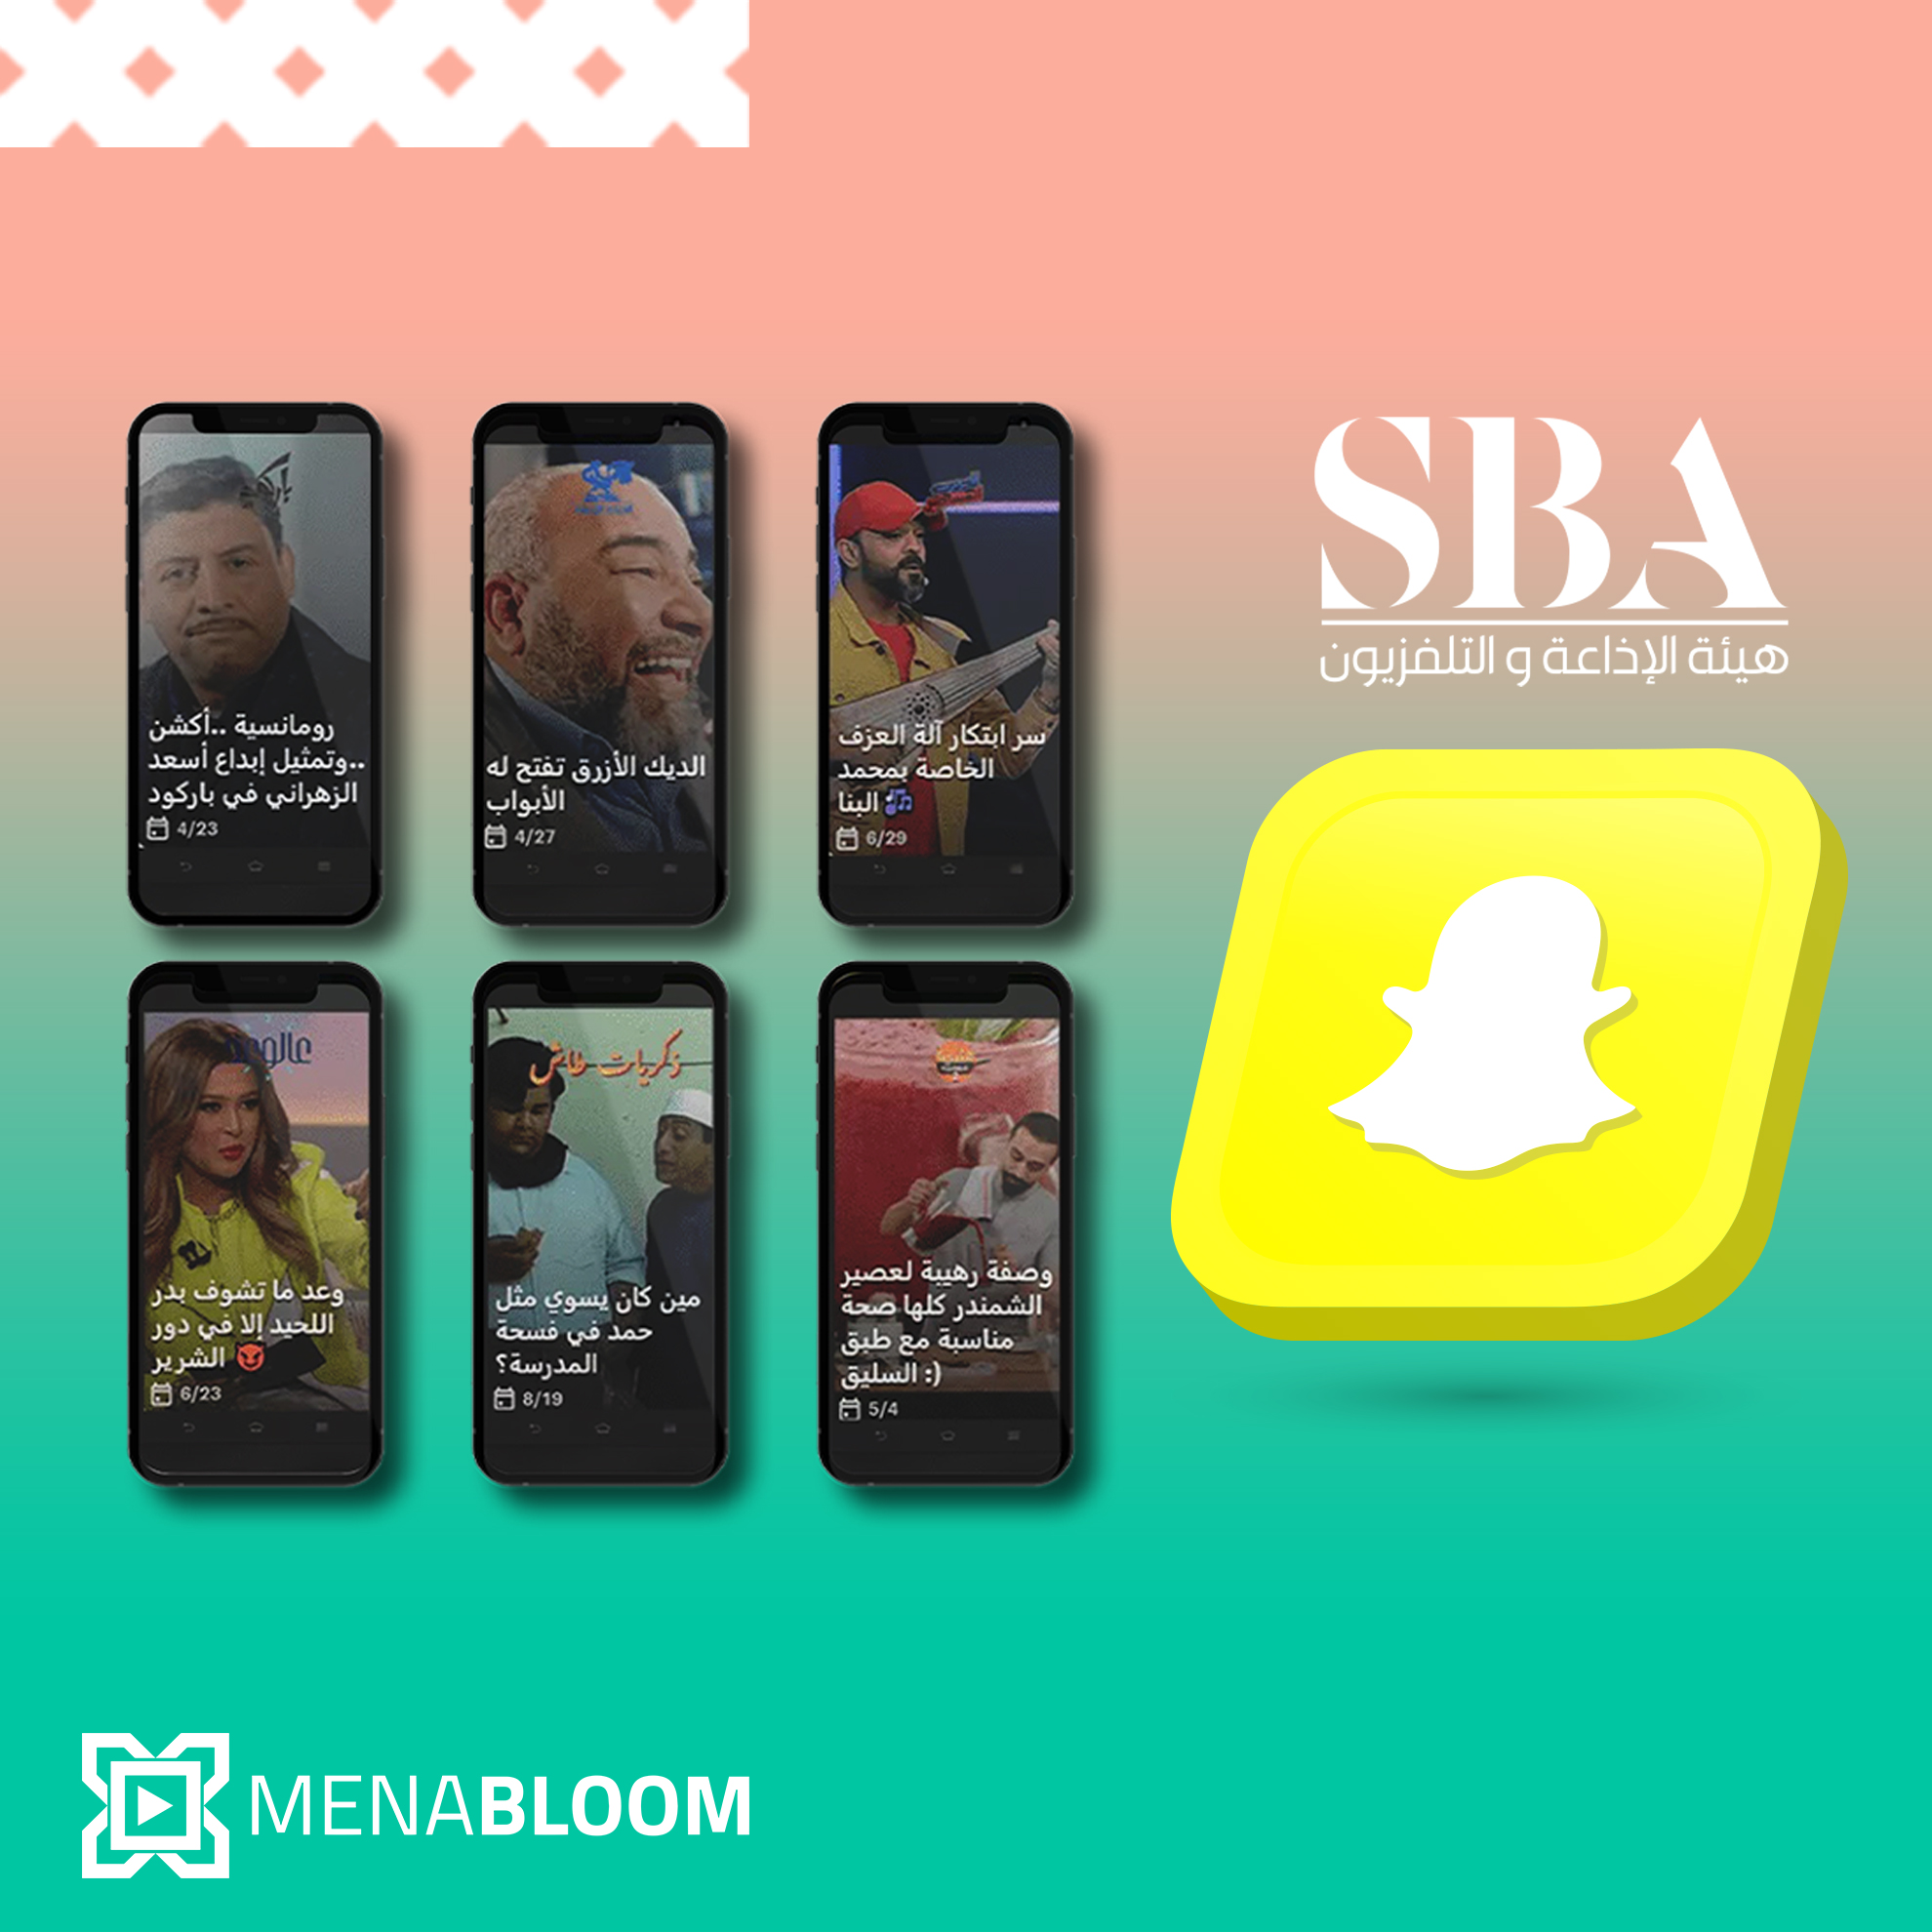 SBA’s Snapchat Channel Management